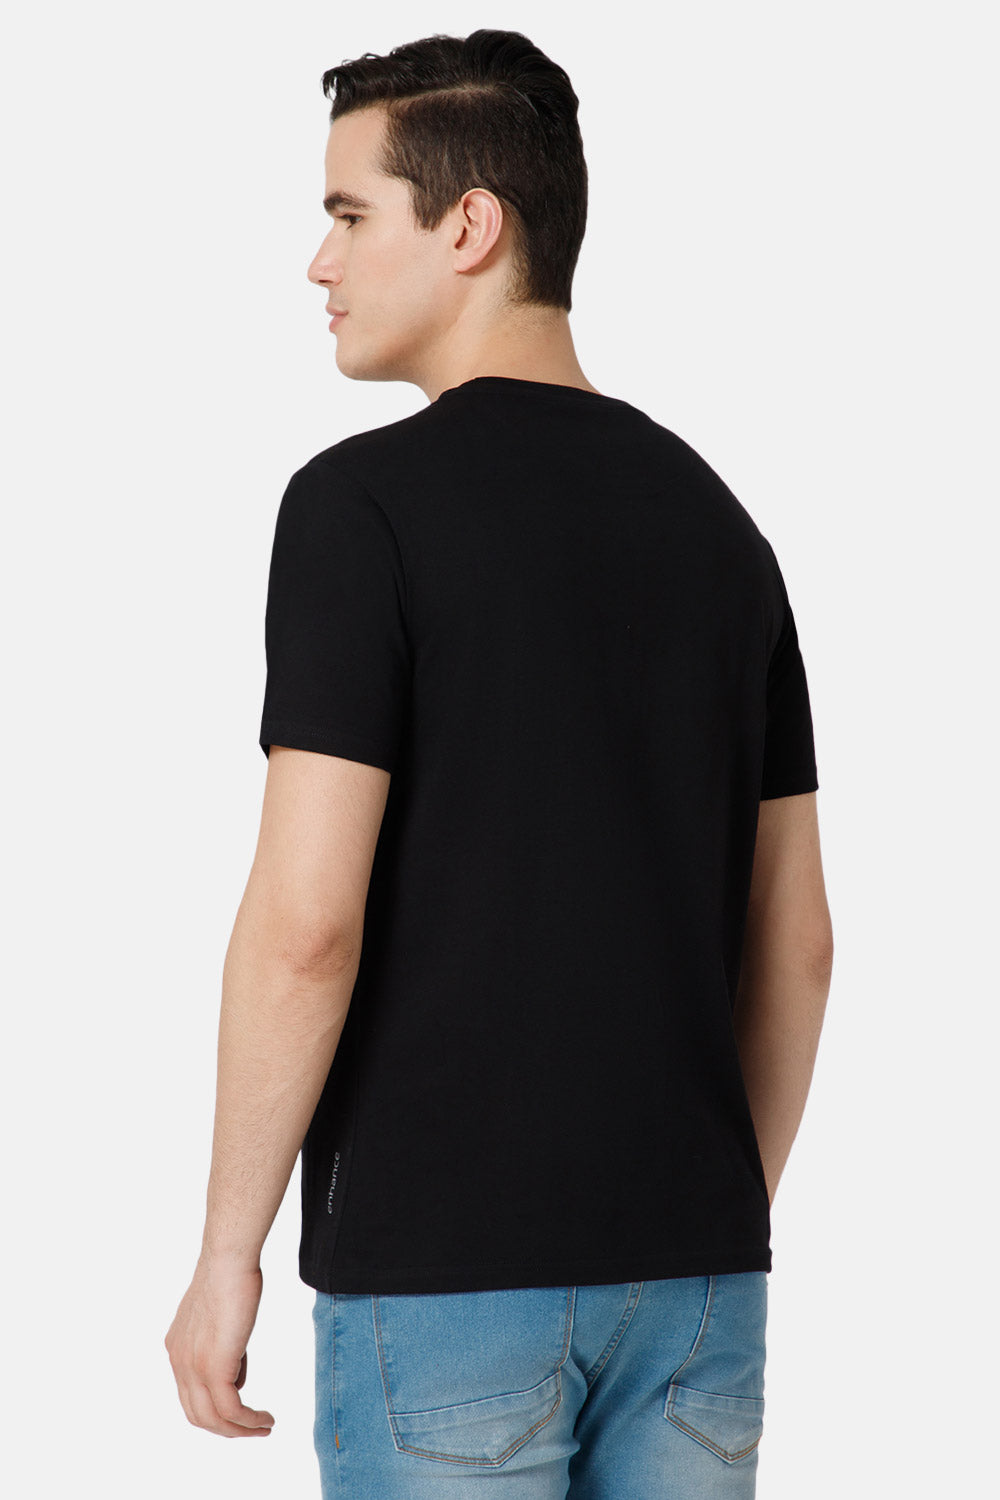 Enhance Printed Crew Neck Men's Casual T-Shirts - Black - TS12